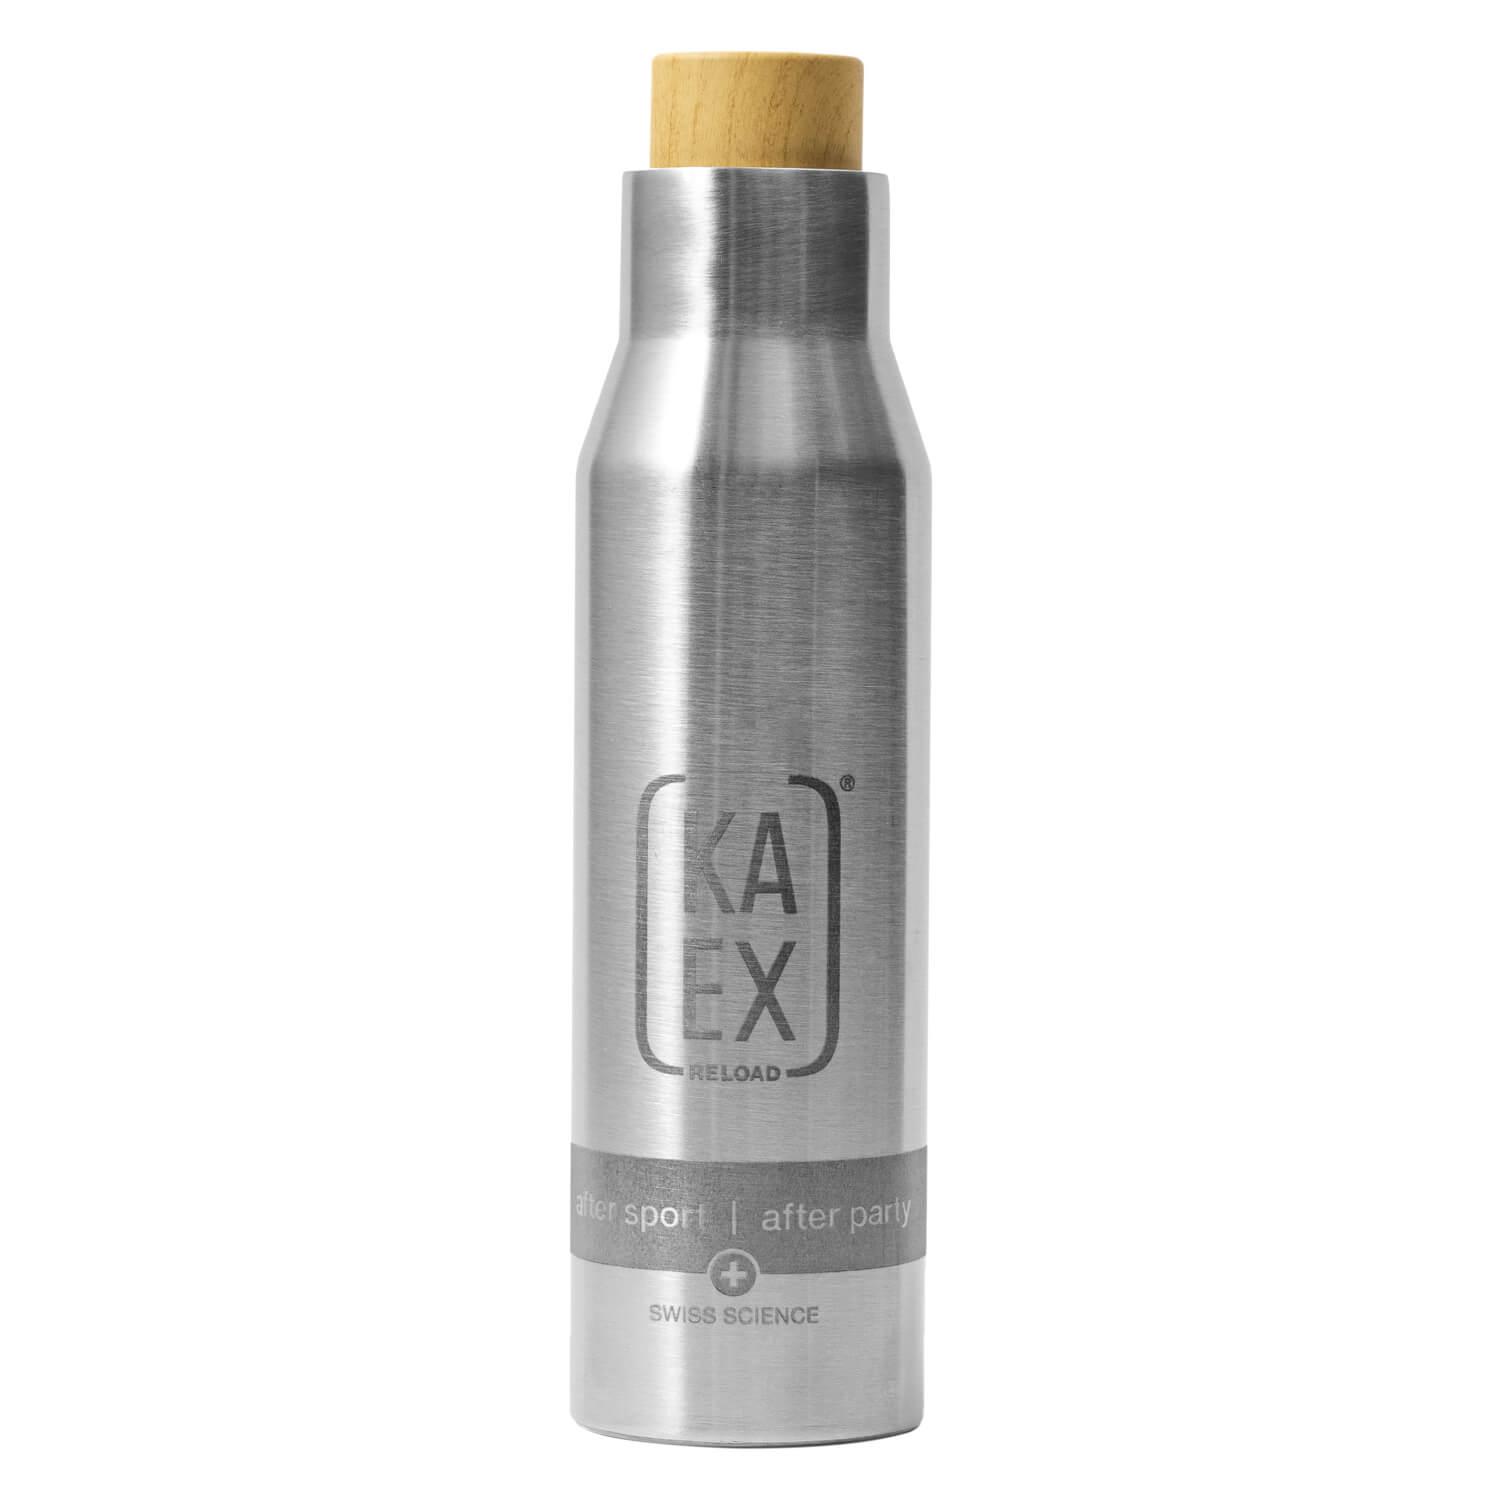 KAEX - Thermoflasche